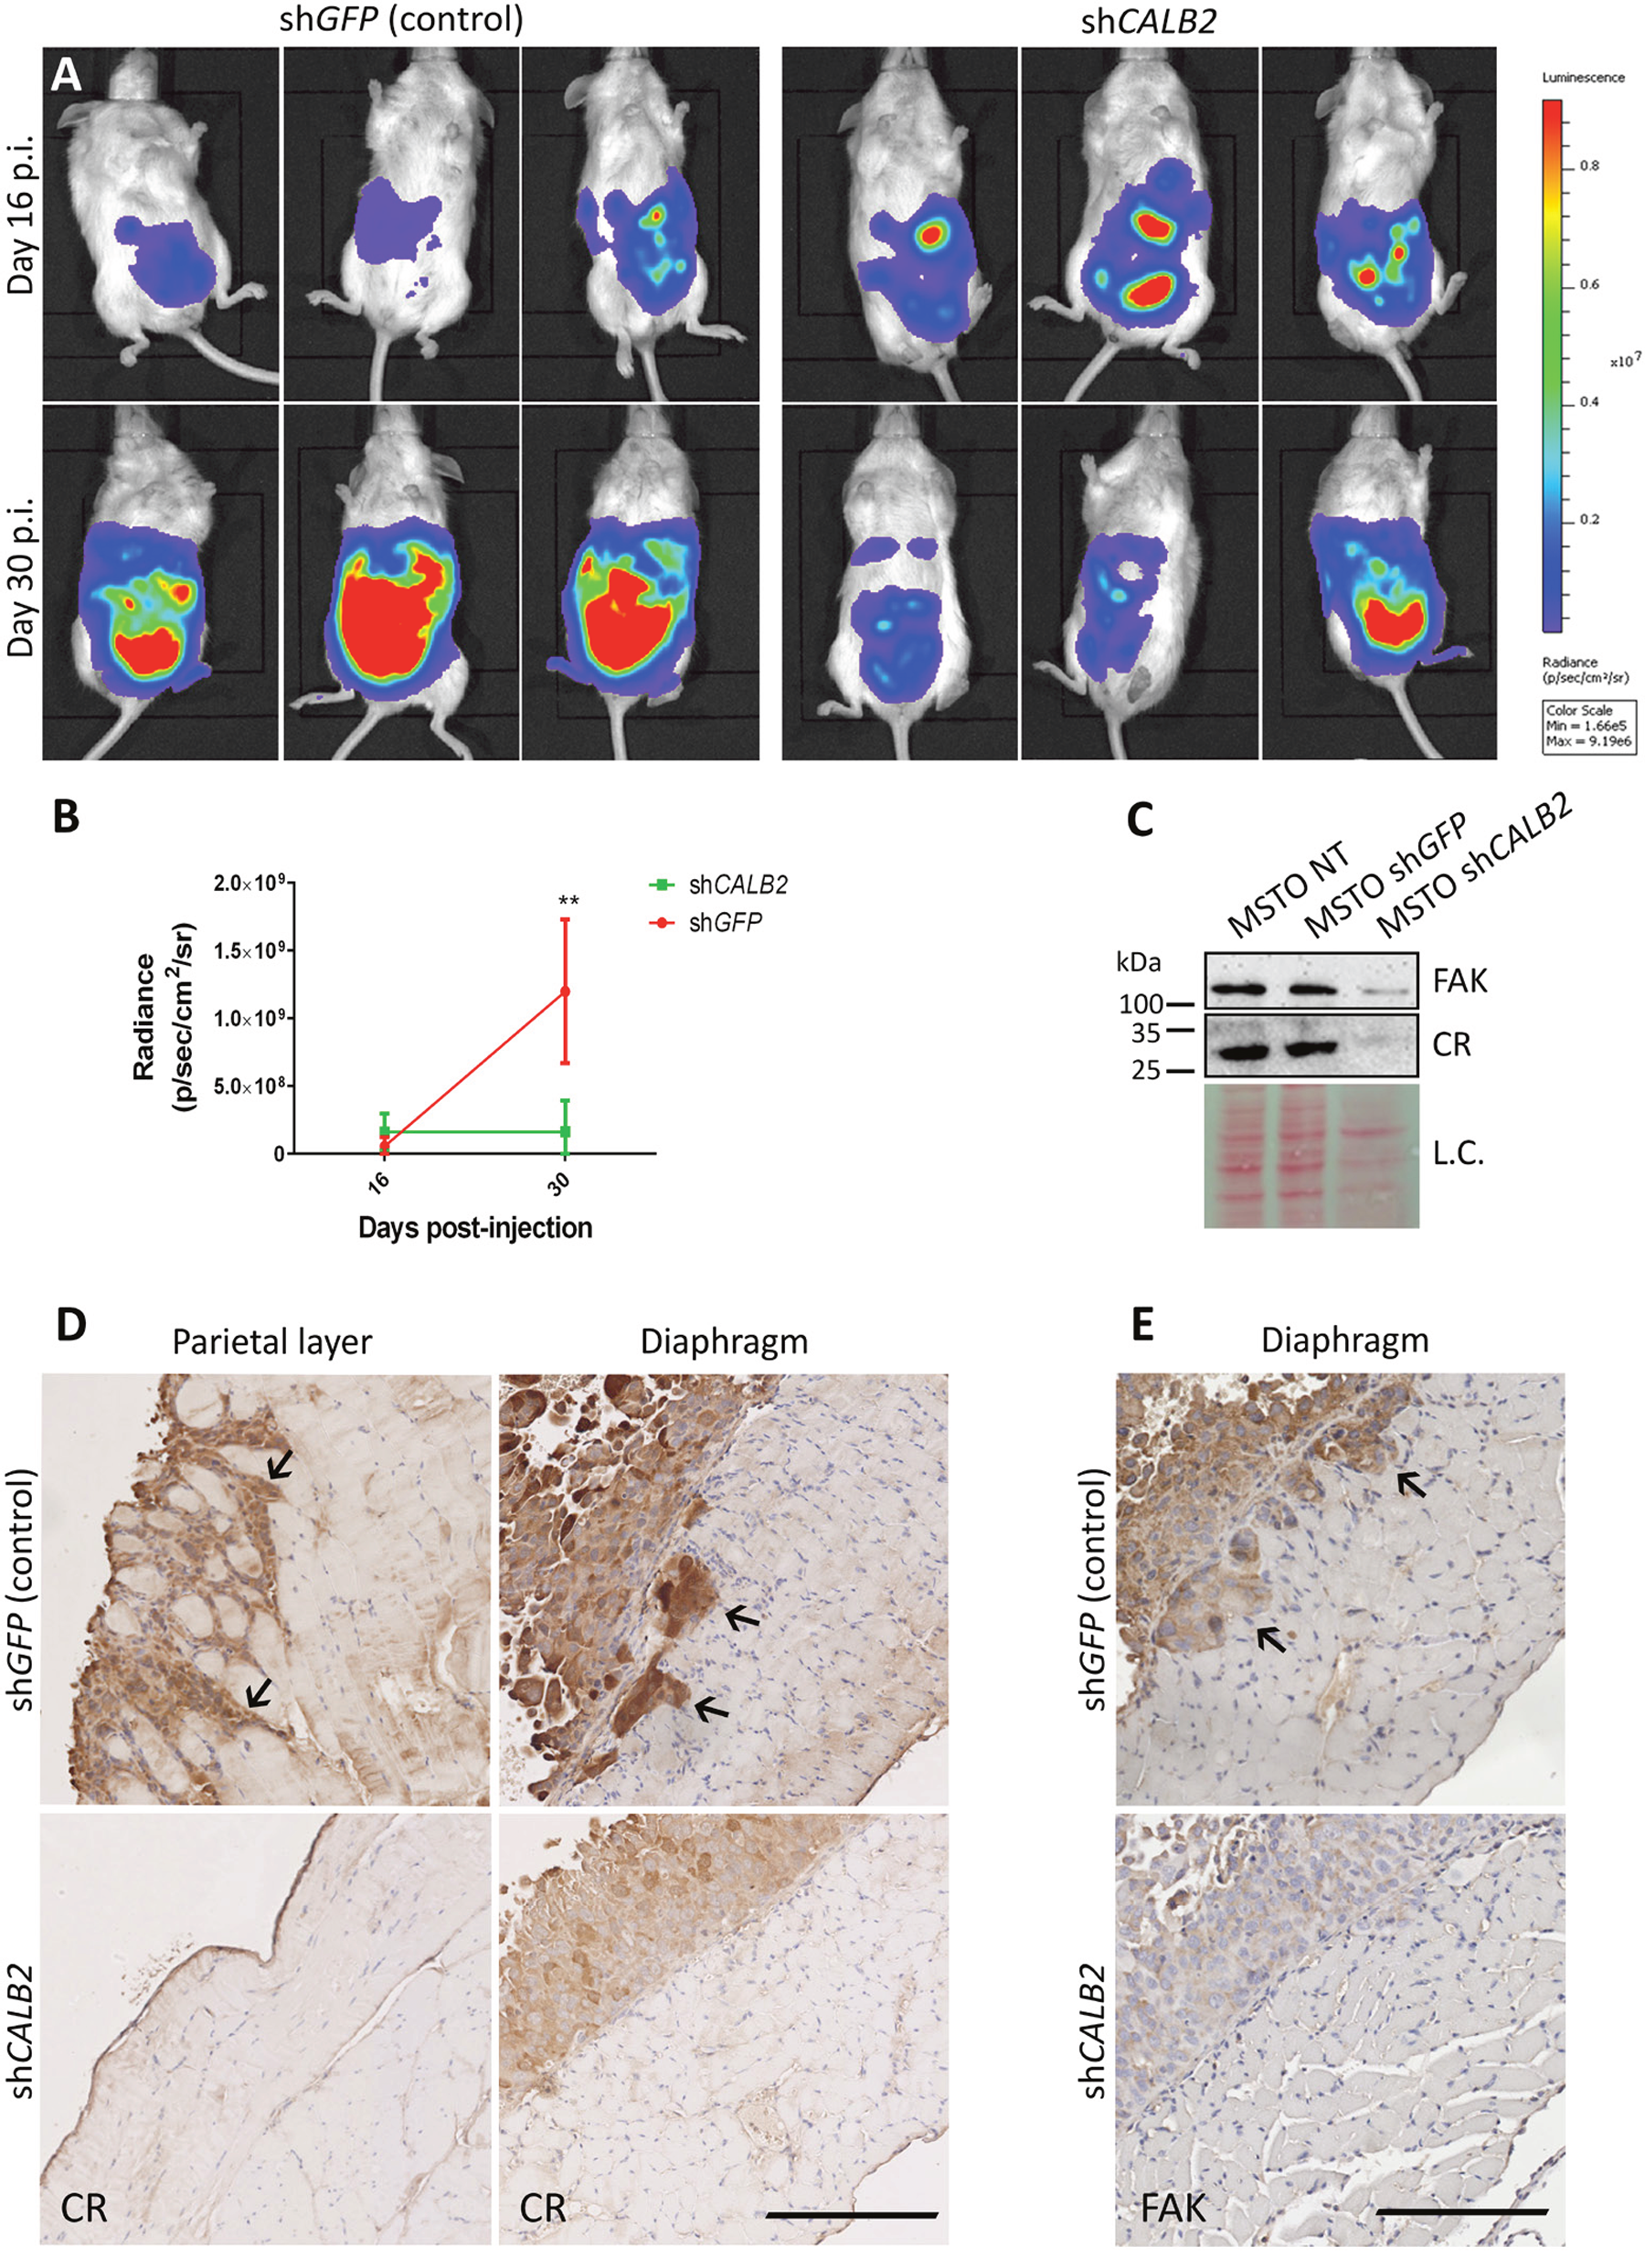 CR downregulation in vivo impairs tumor progression in a MM orthotopic xenograft mouse model.